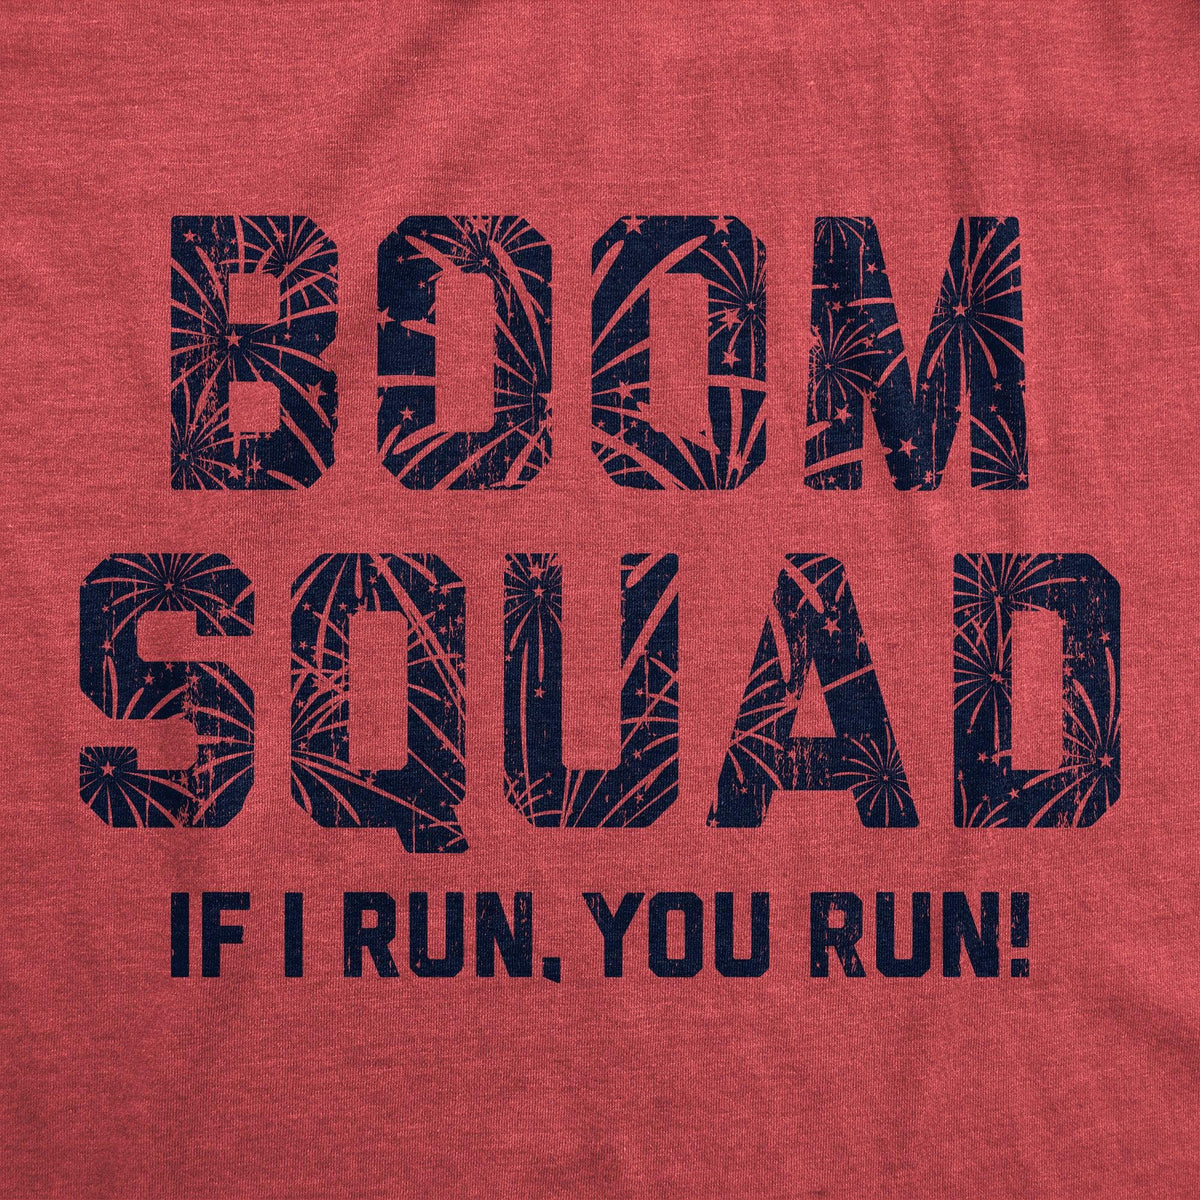 Boom Squad Men&#39;s Tshirt  -  Crazy Dog T-Shirts